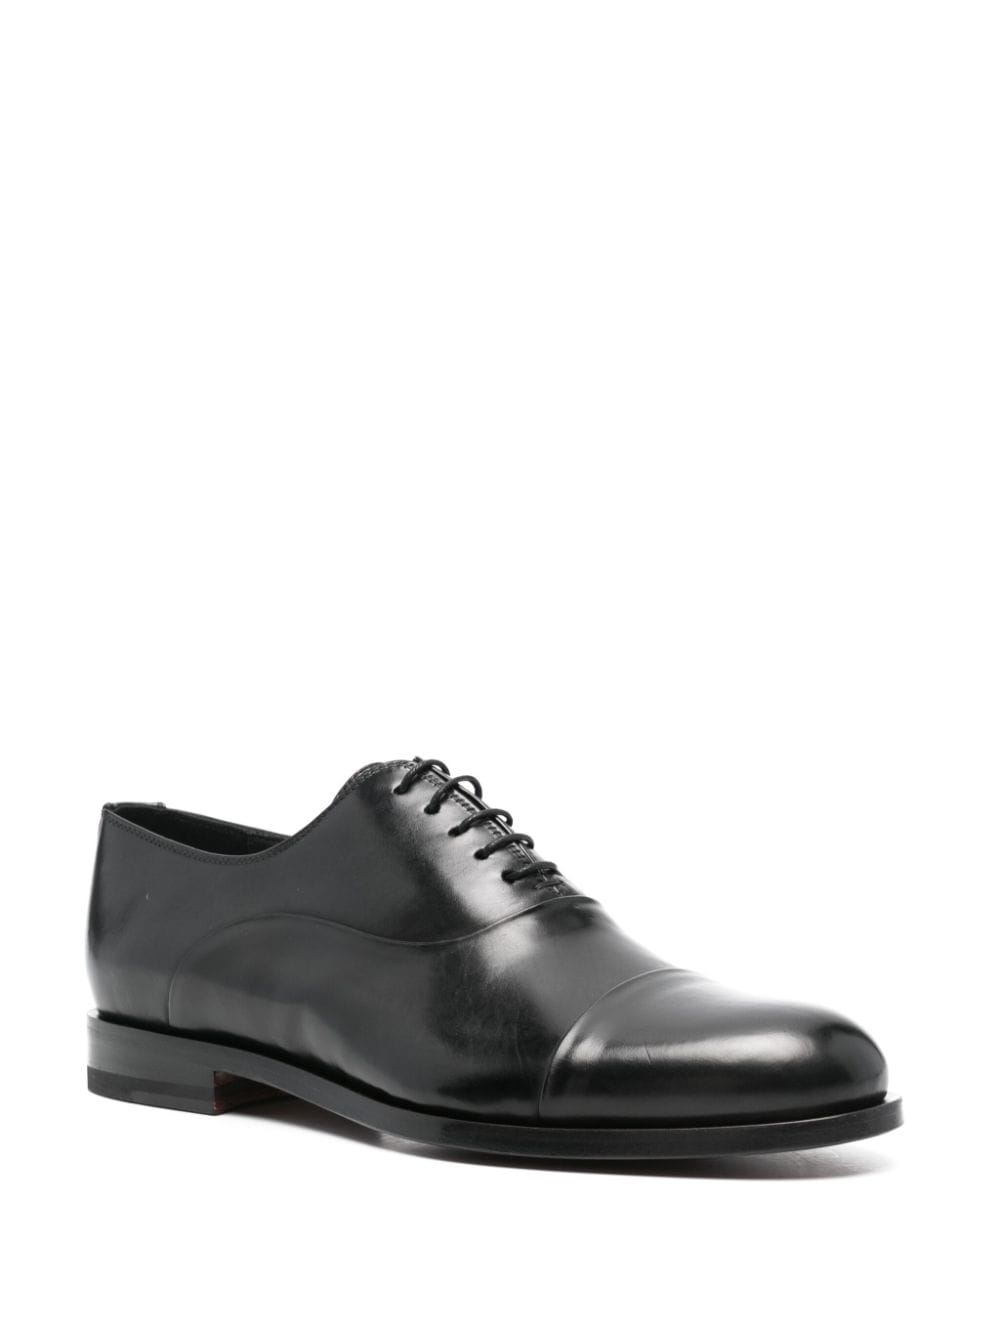 Tagliatore leather oxford shoes - Zwart